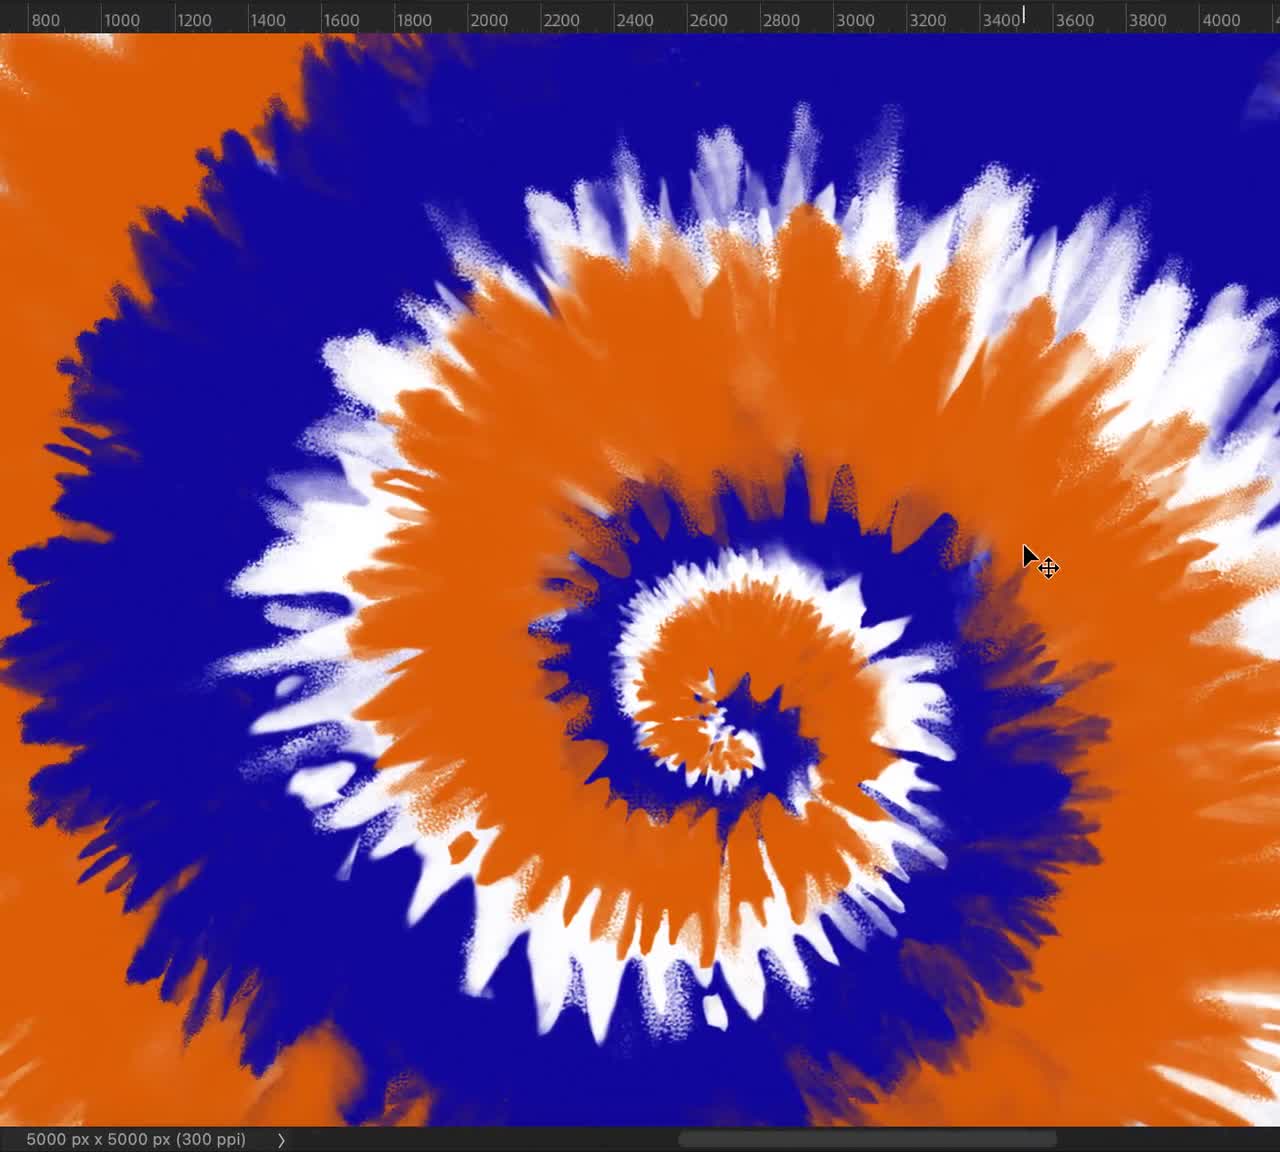 orange and white swirl background